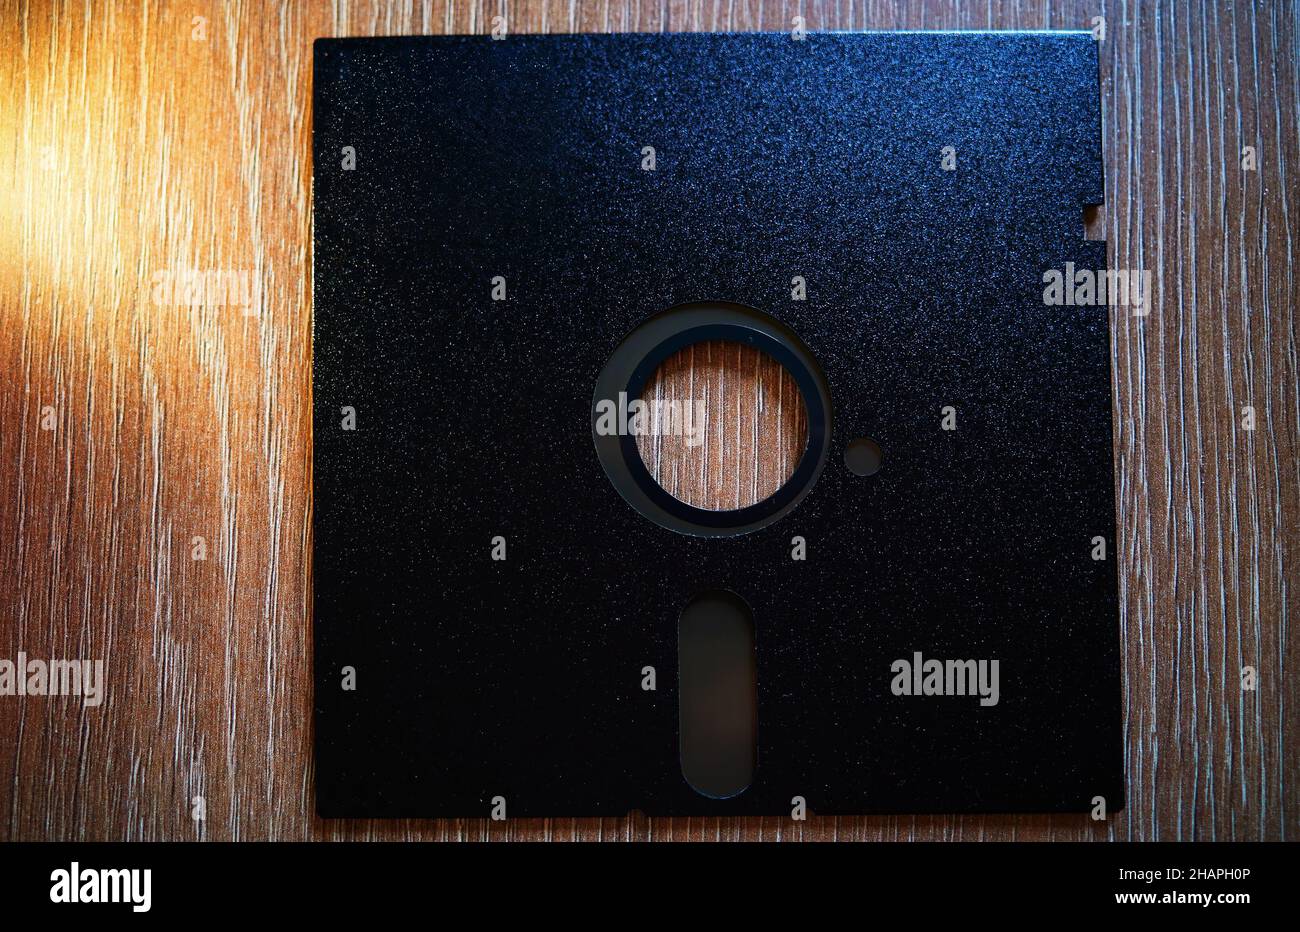 Blank black floppy disc 5.25 inch storage background Stock Photo